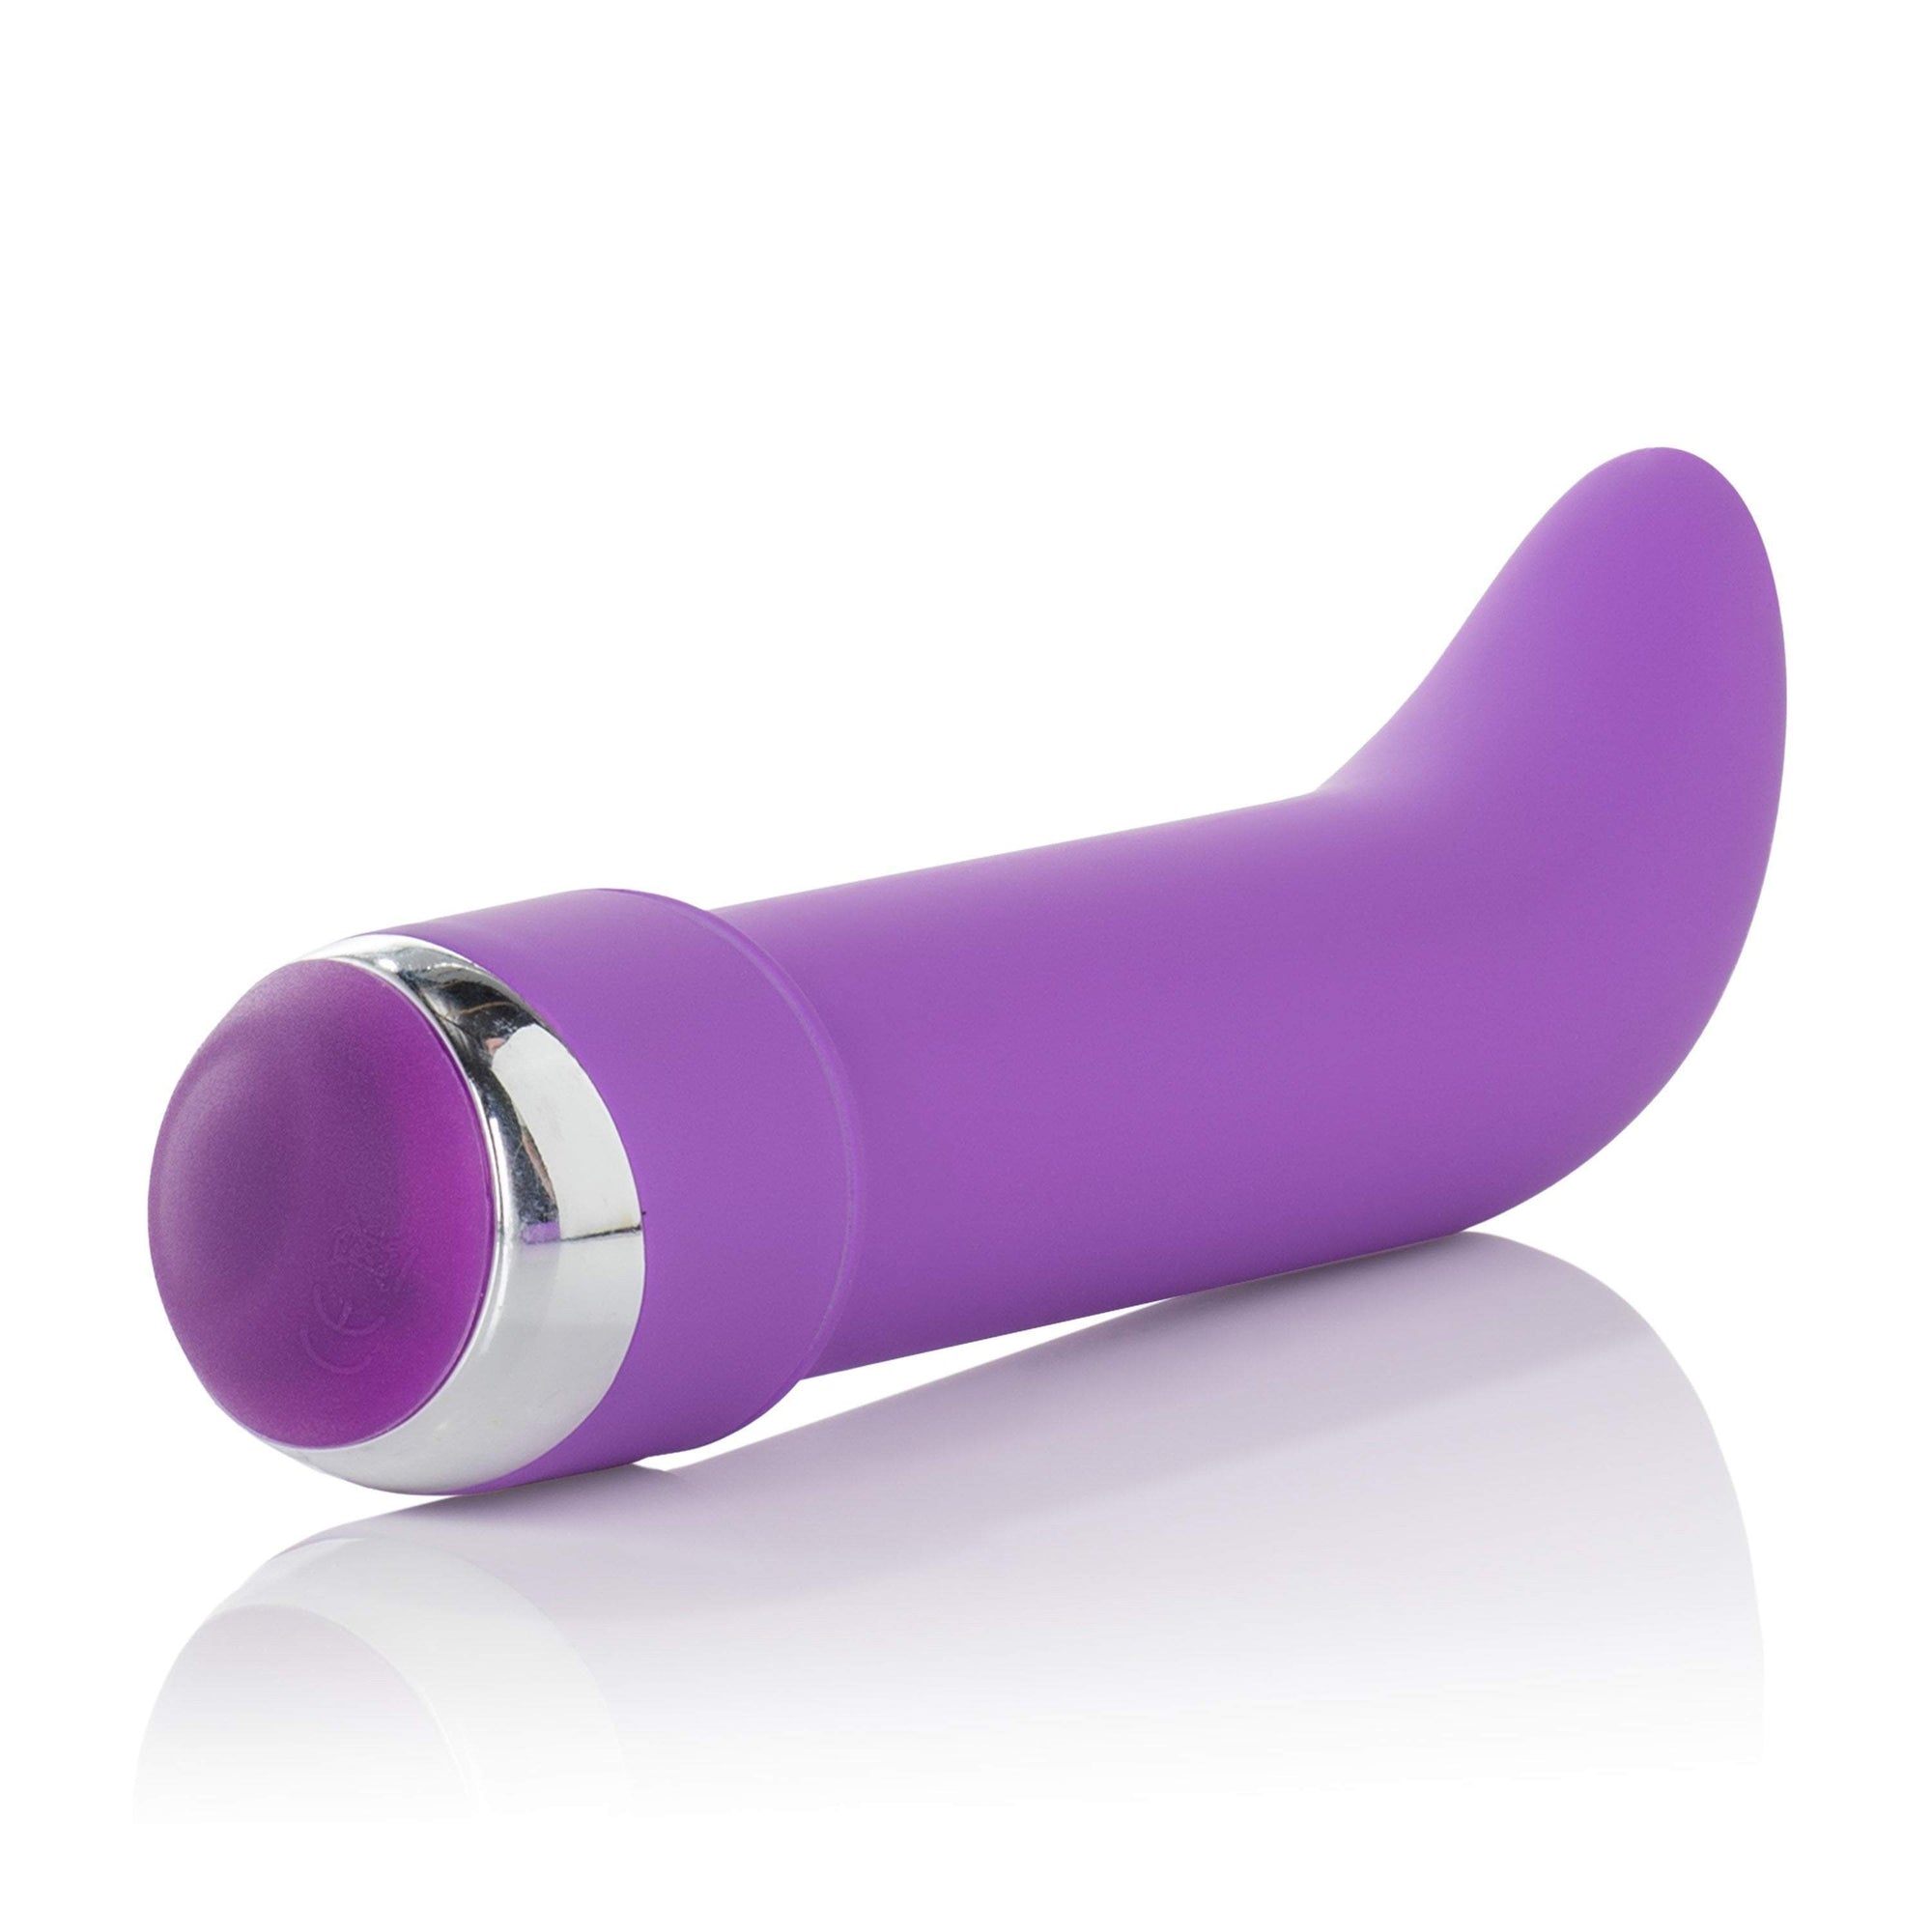 California Exotics - 7 Function Classic Chic Mini G Spot Vibrator (Purple) G Spot Dildo (Vibration) Non Rechargeable